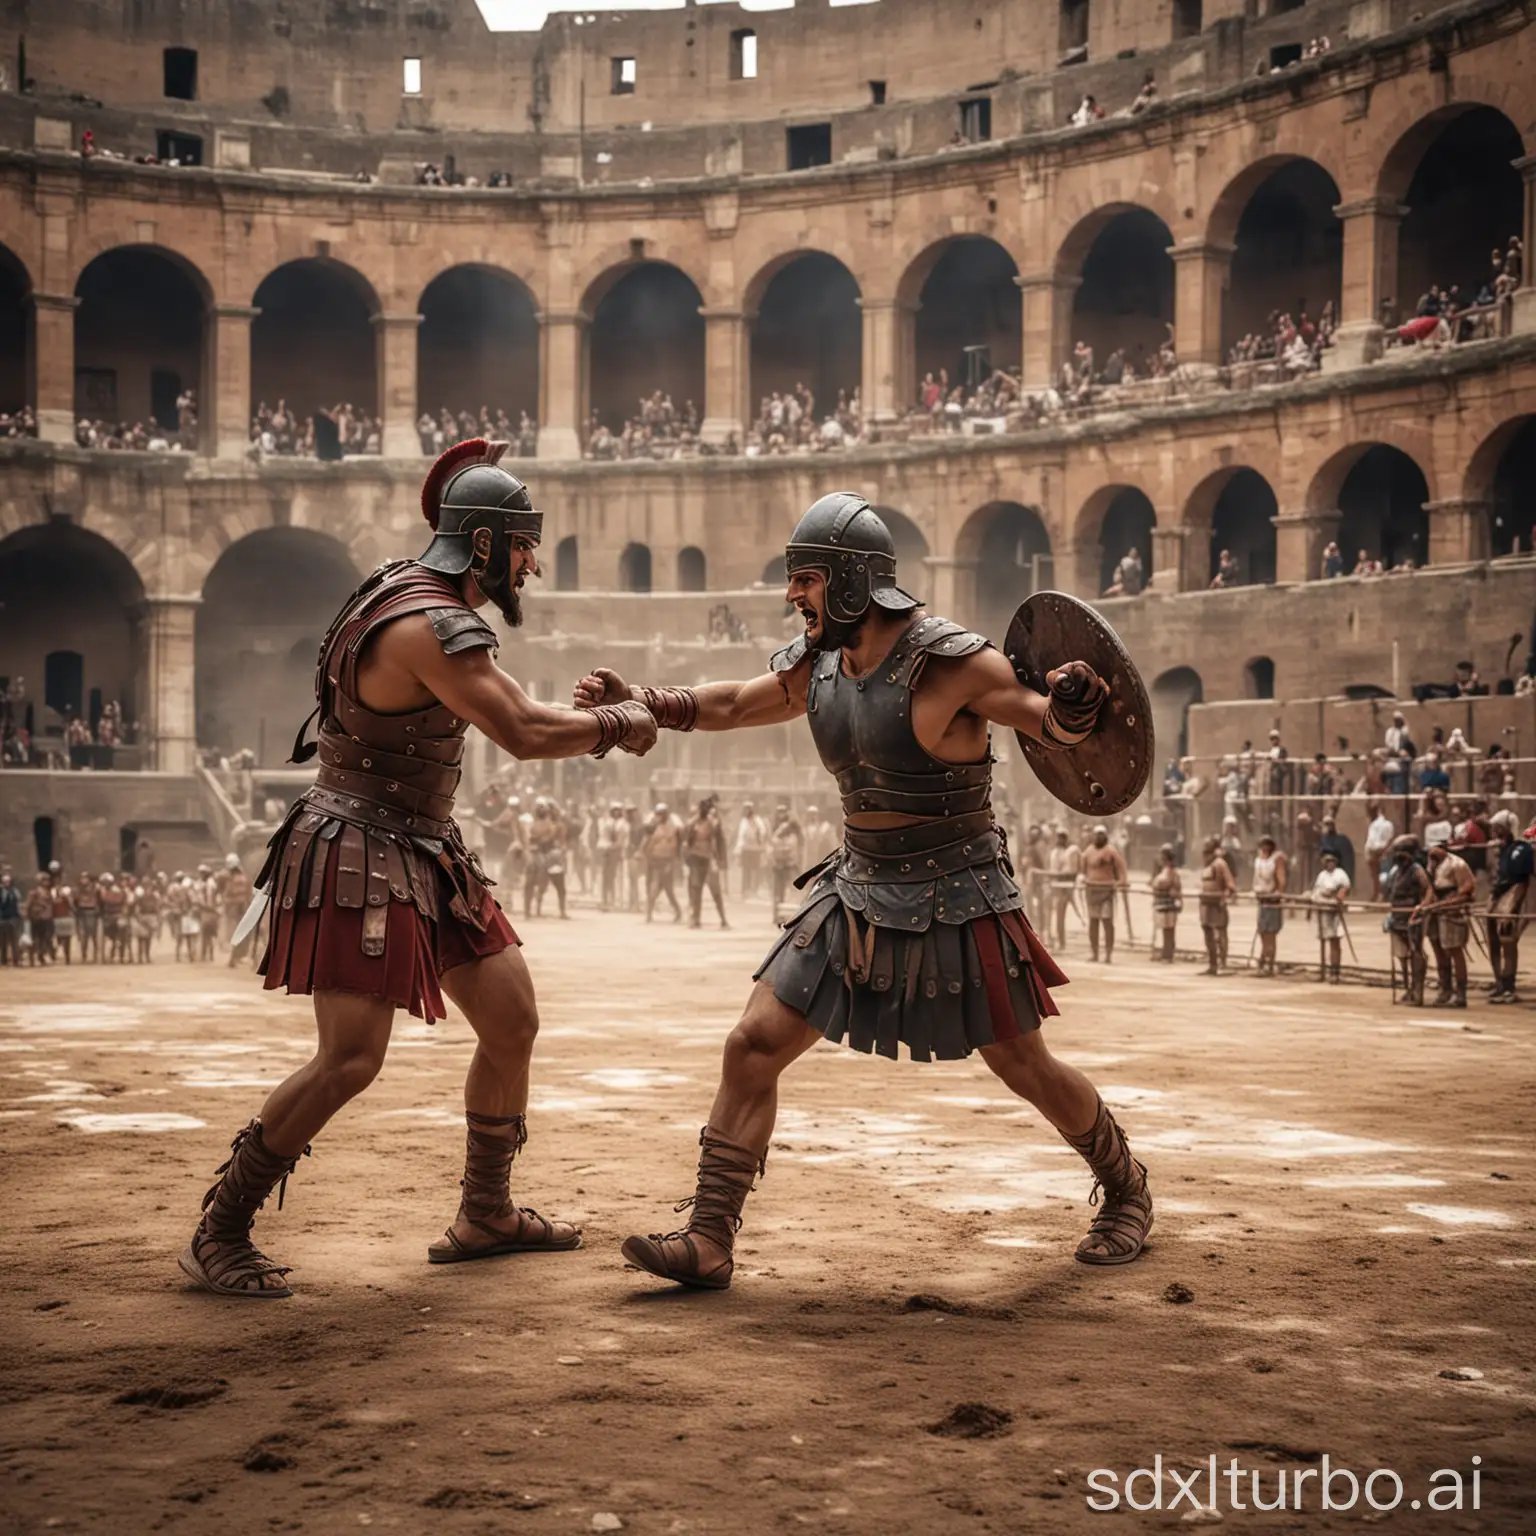 Gladiators-Romanes-Fighting-in-the-Coliseum